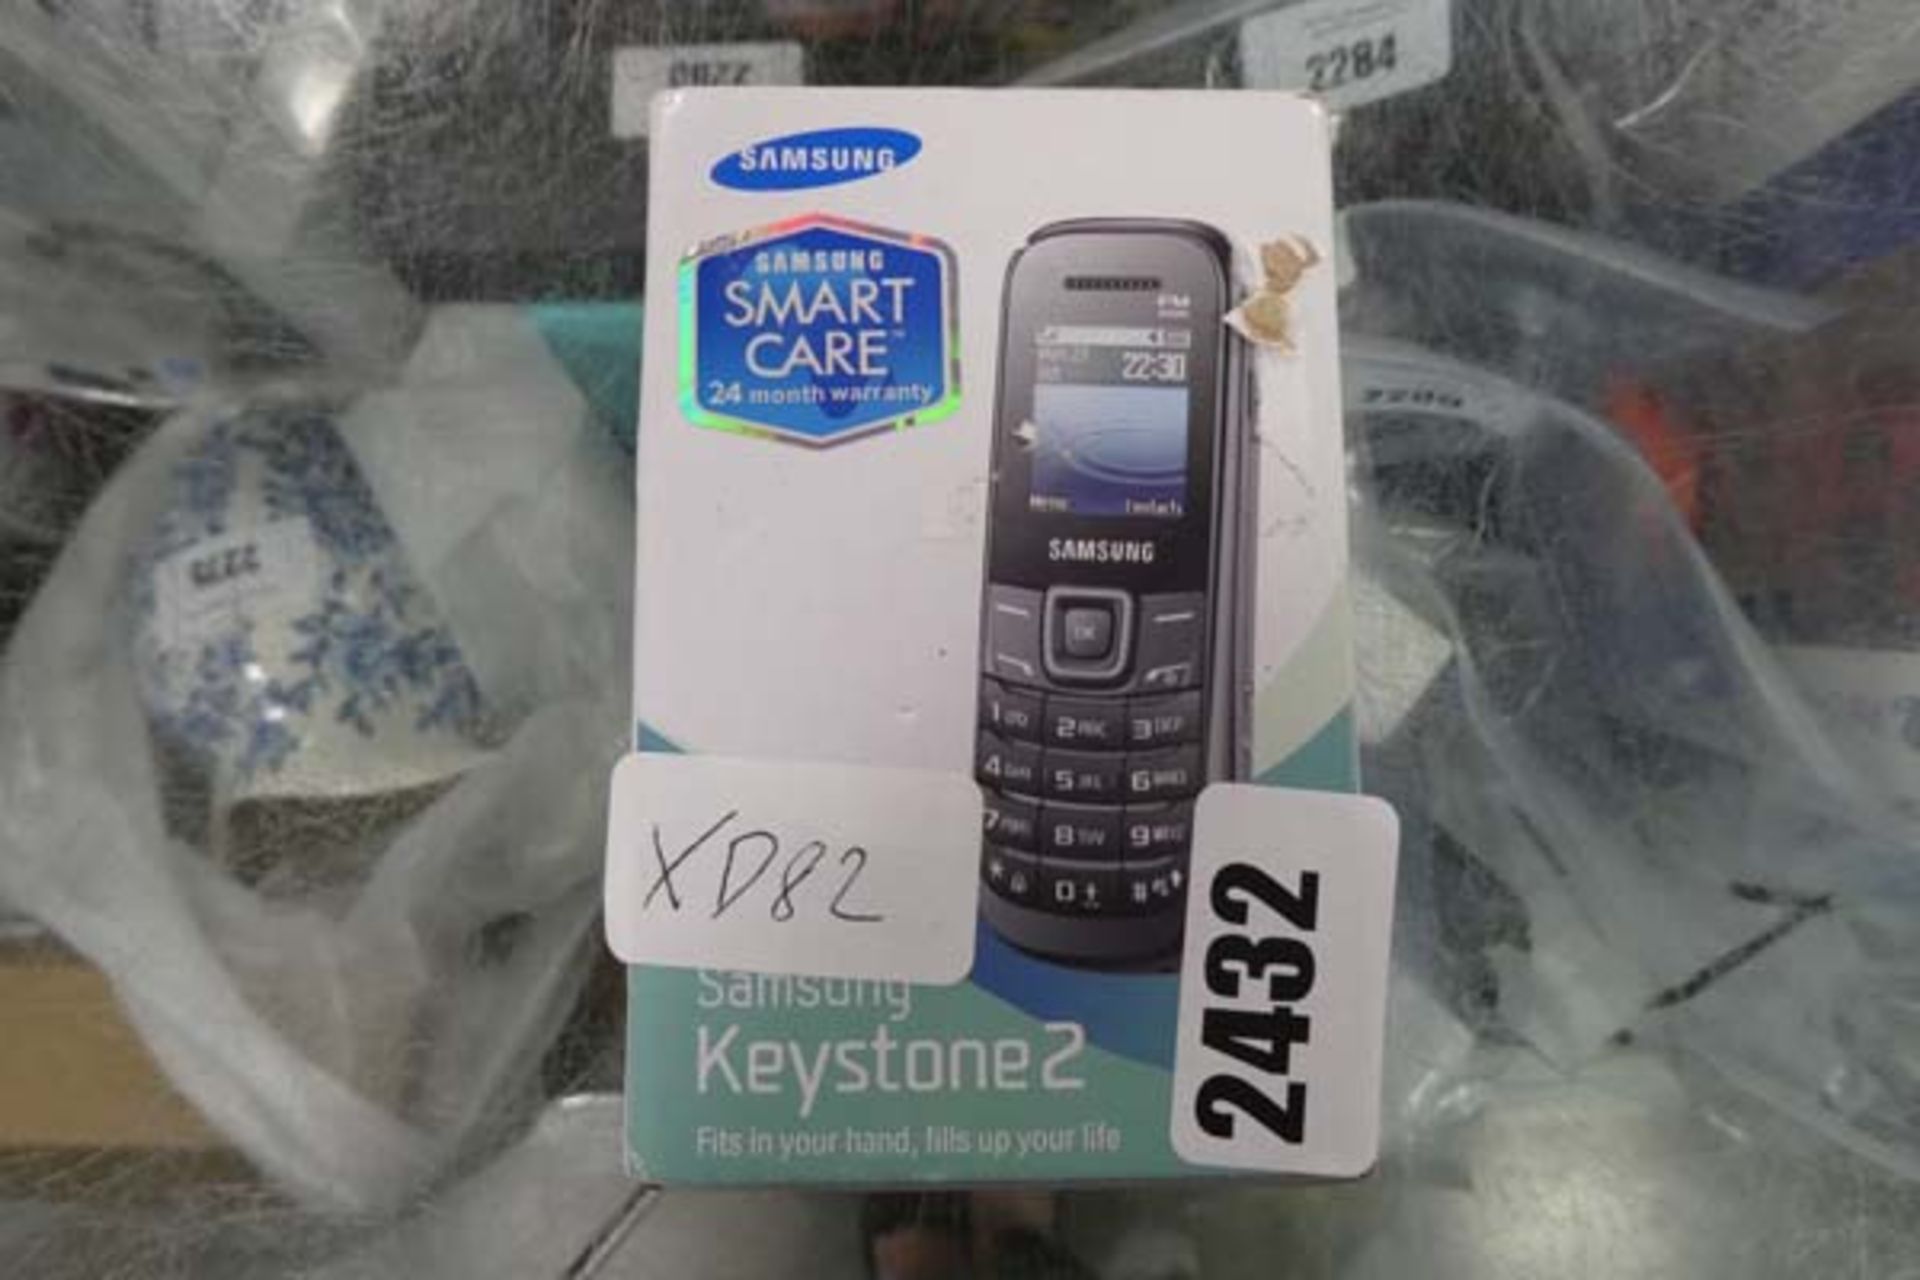 Samsung Keystone 2 mobile phone with box